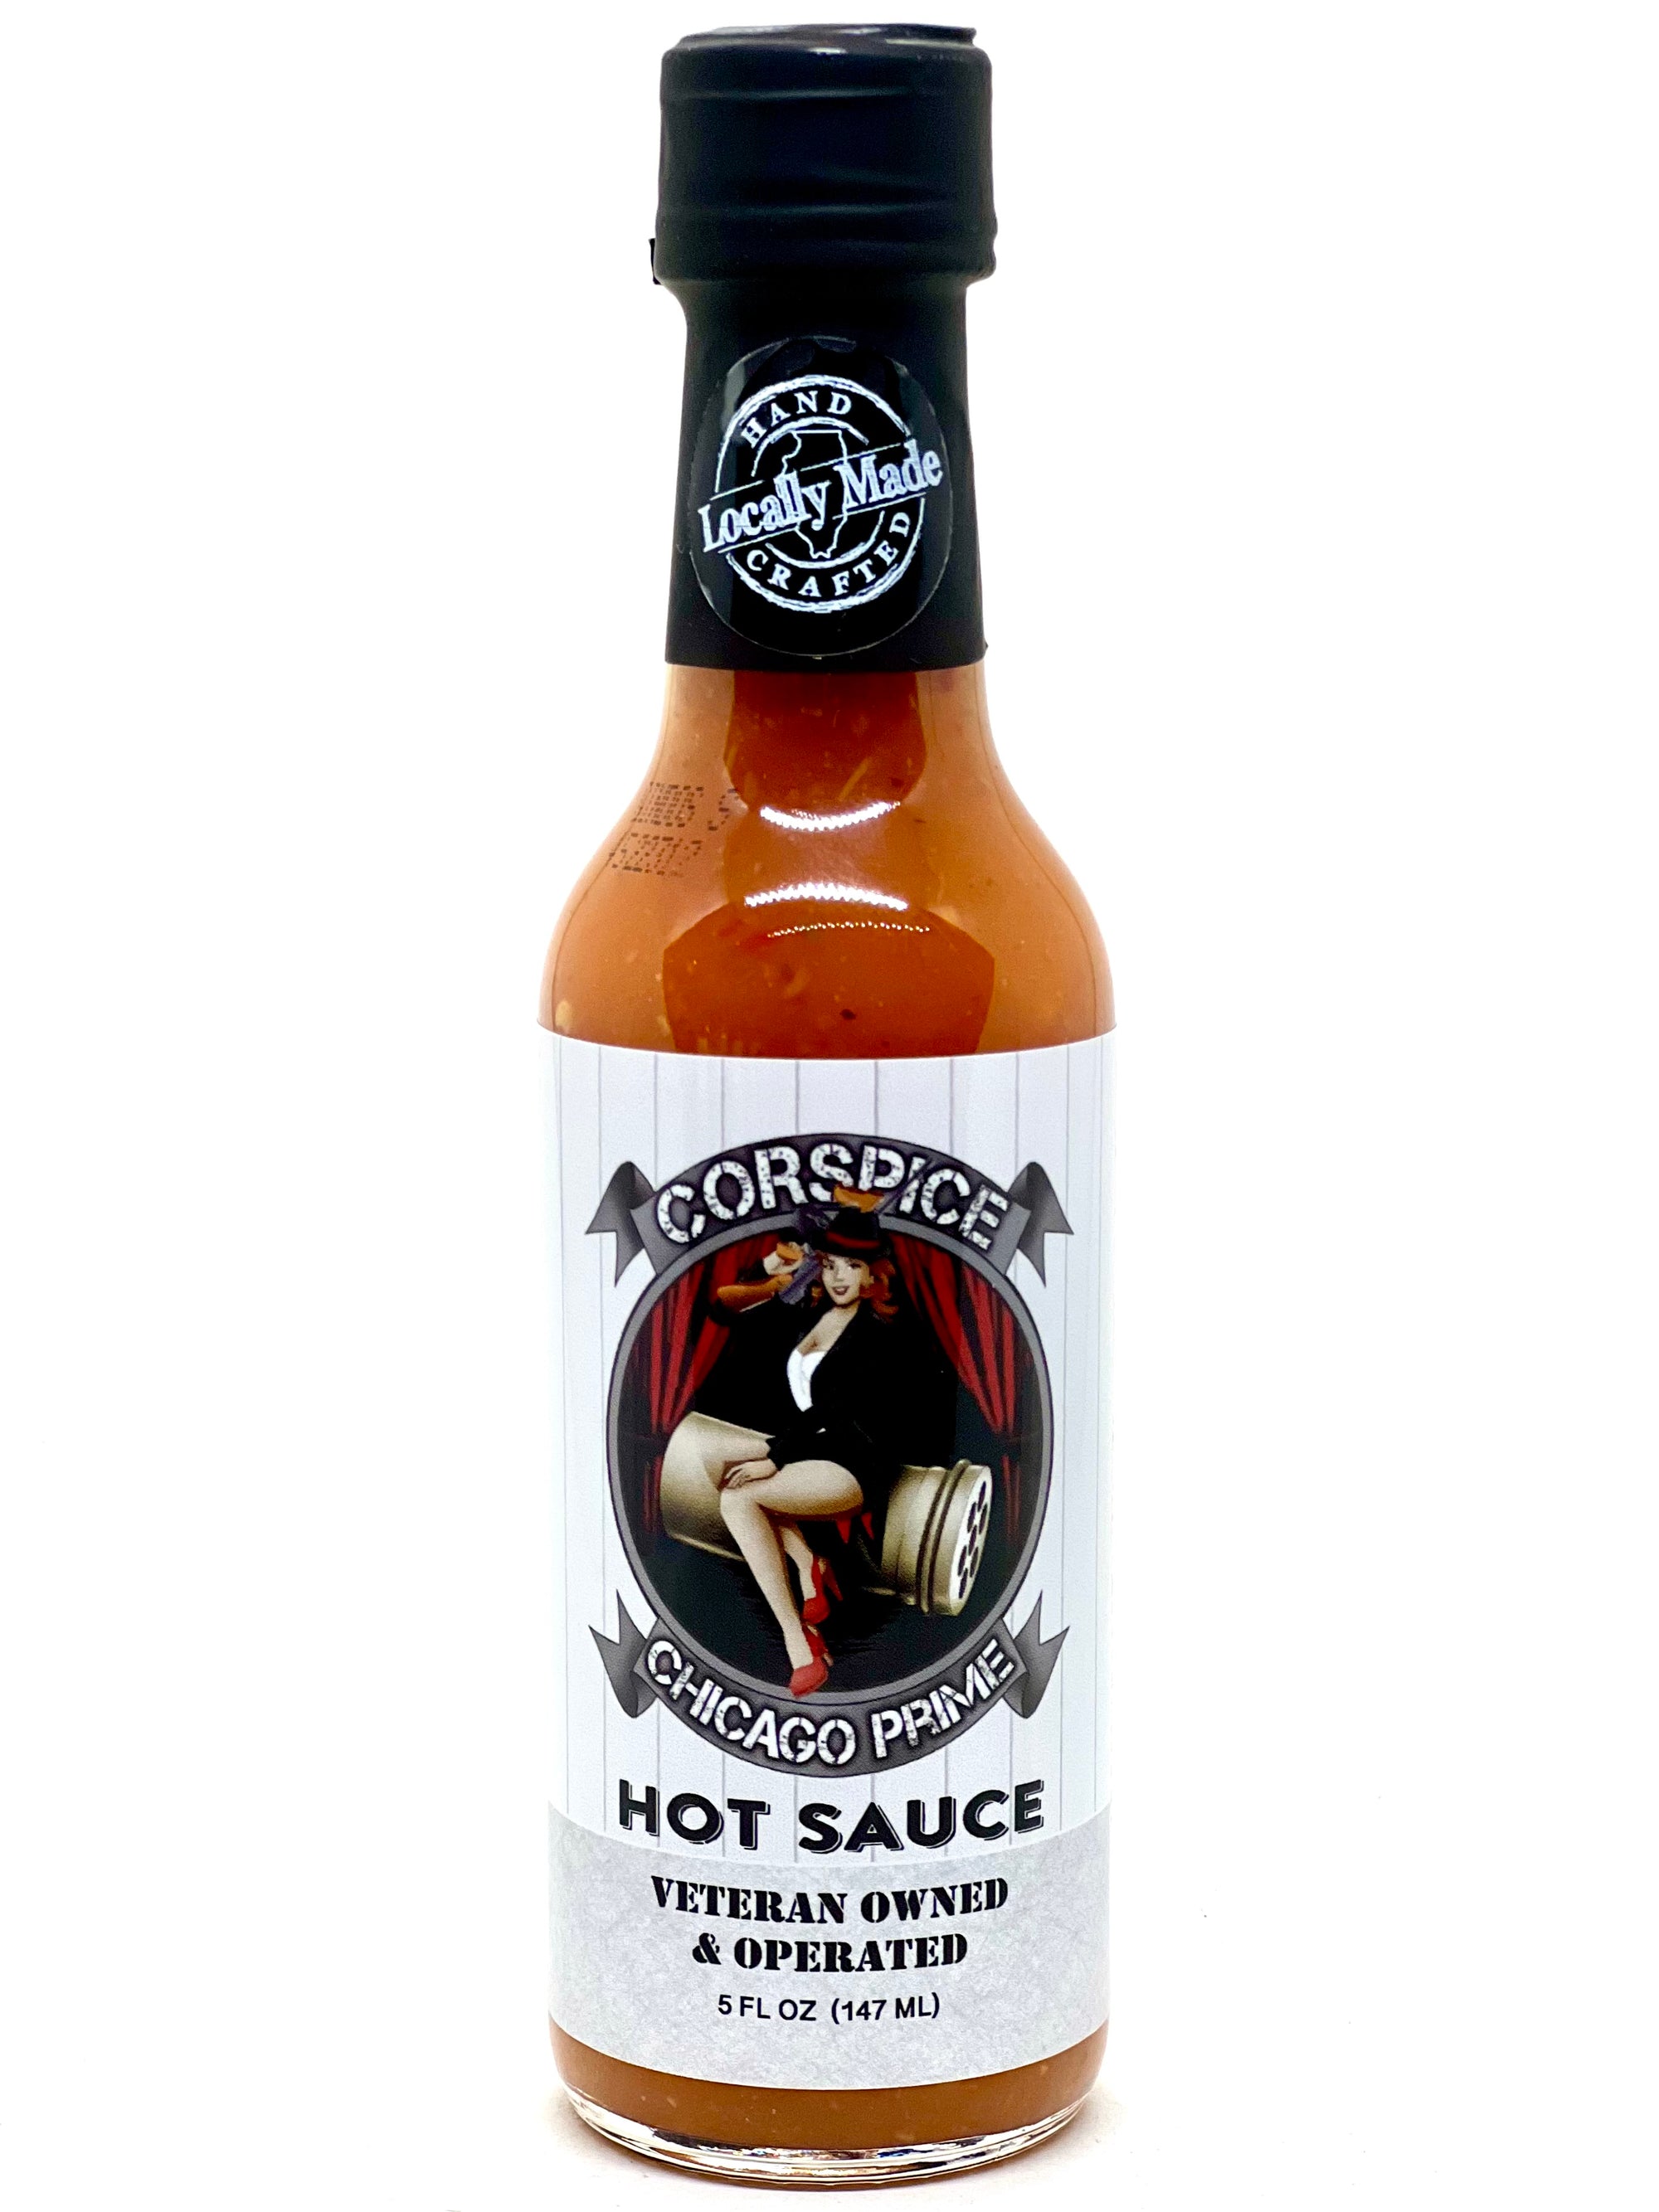 Chicago Prime Hot Sauce